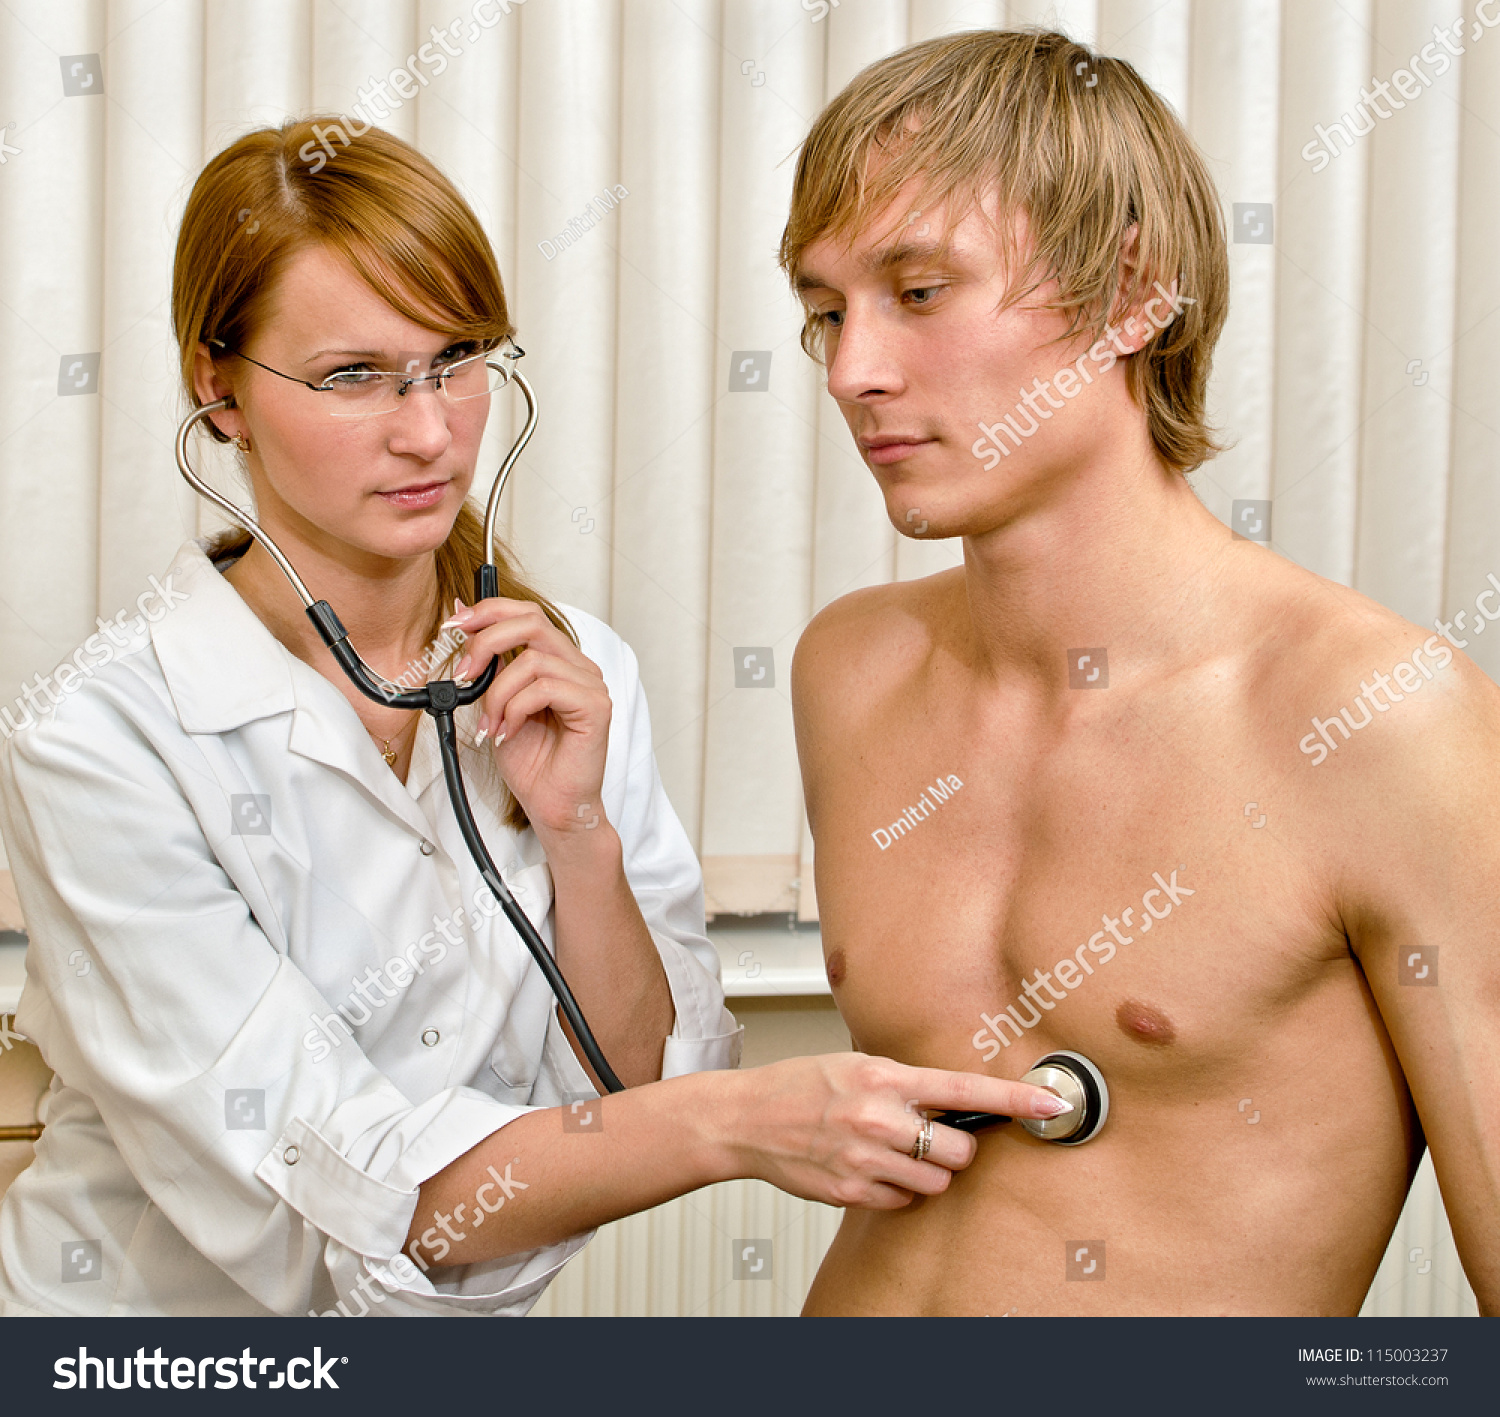 dandrea johnson add photo female doctors examining men